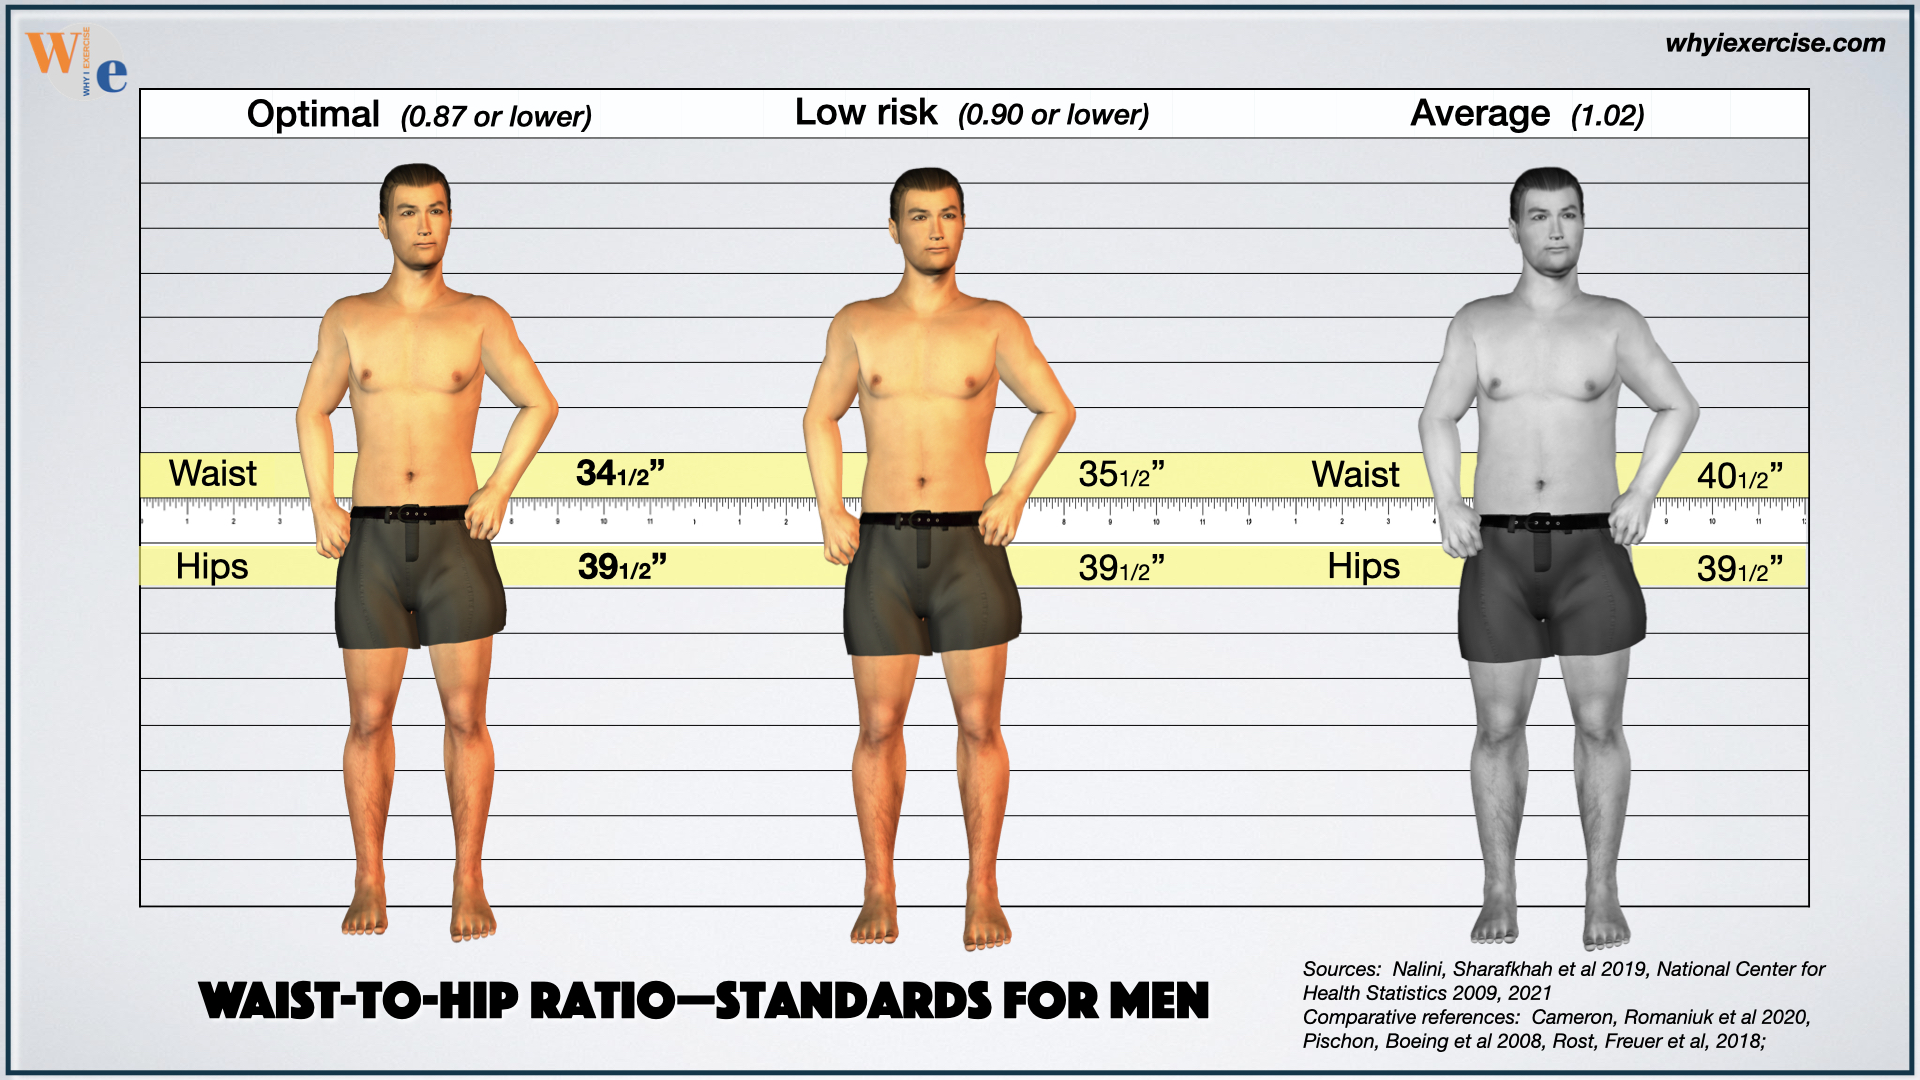 Body image and waist-to-hip ratio